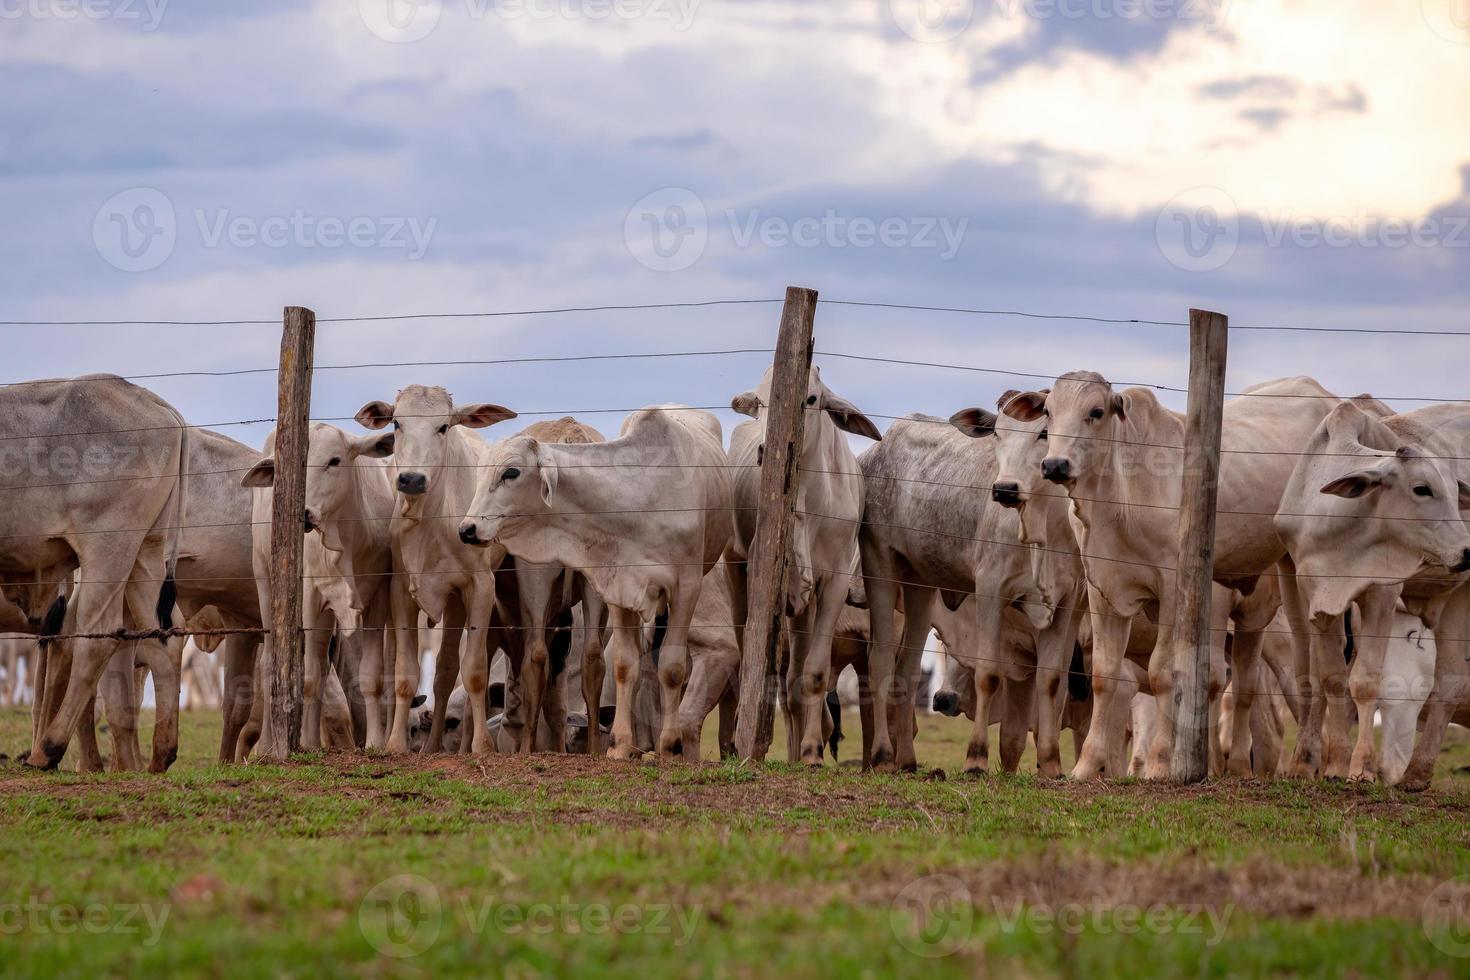 grupp av kor i ett betesmark foto